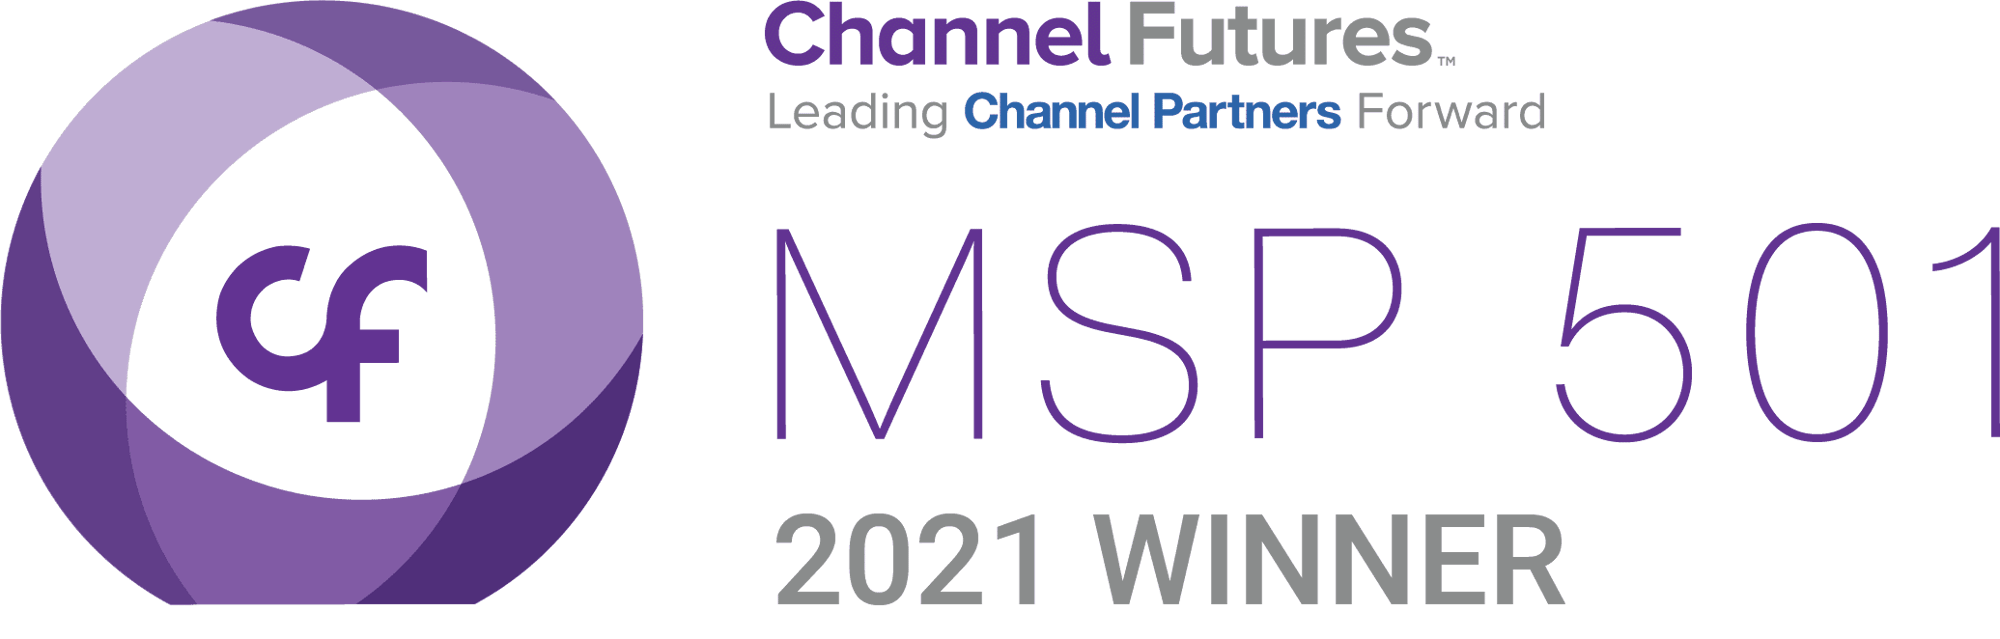 CP-1381-MSP-501-Winner-Logo-2021_V1